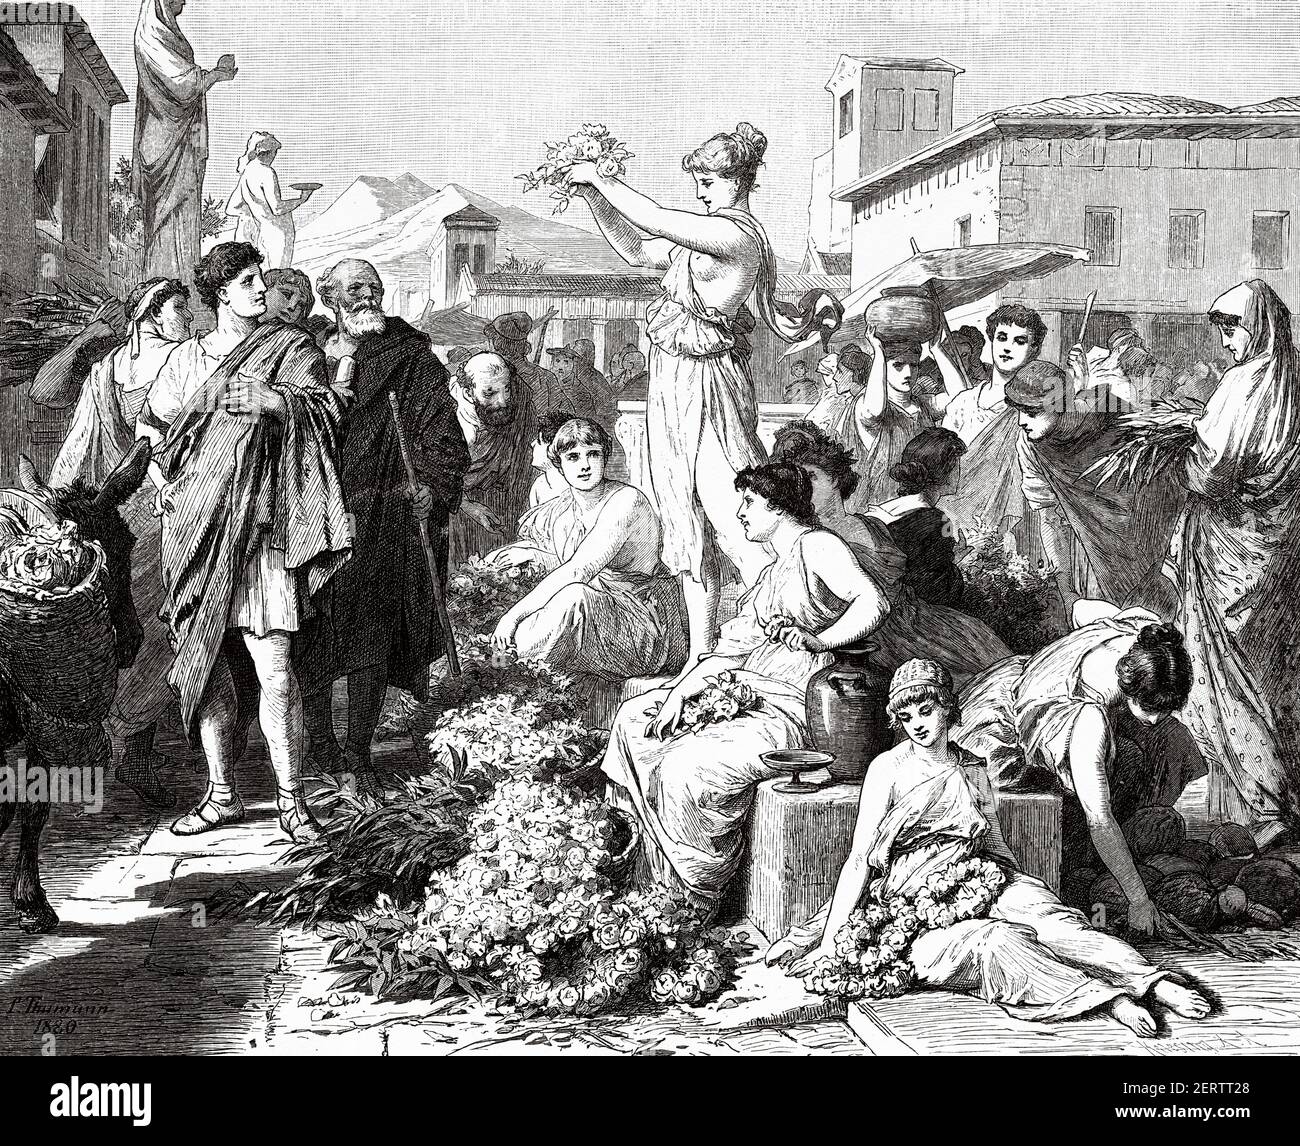 Daily life at the flower market, Athens. Ancient Greece. Europe. Old 19th century engraved illustration, El Mundo Ilustrado 1881 Stock Photo